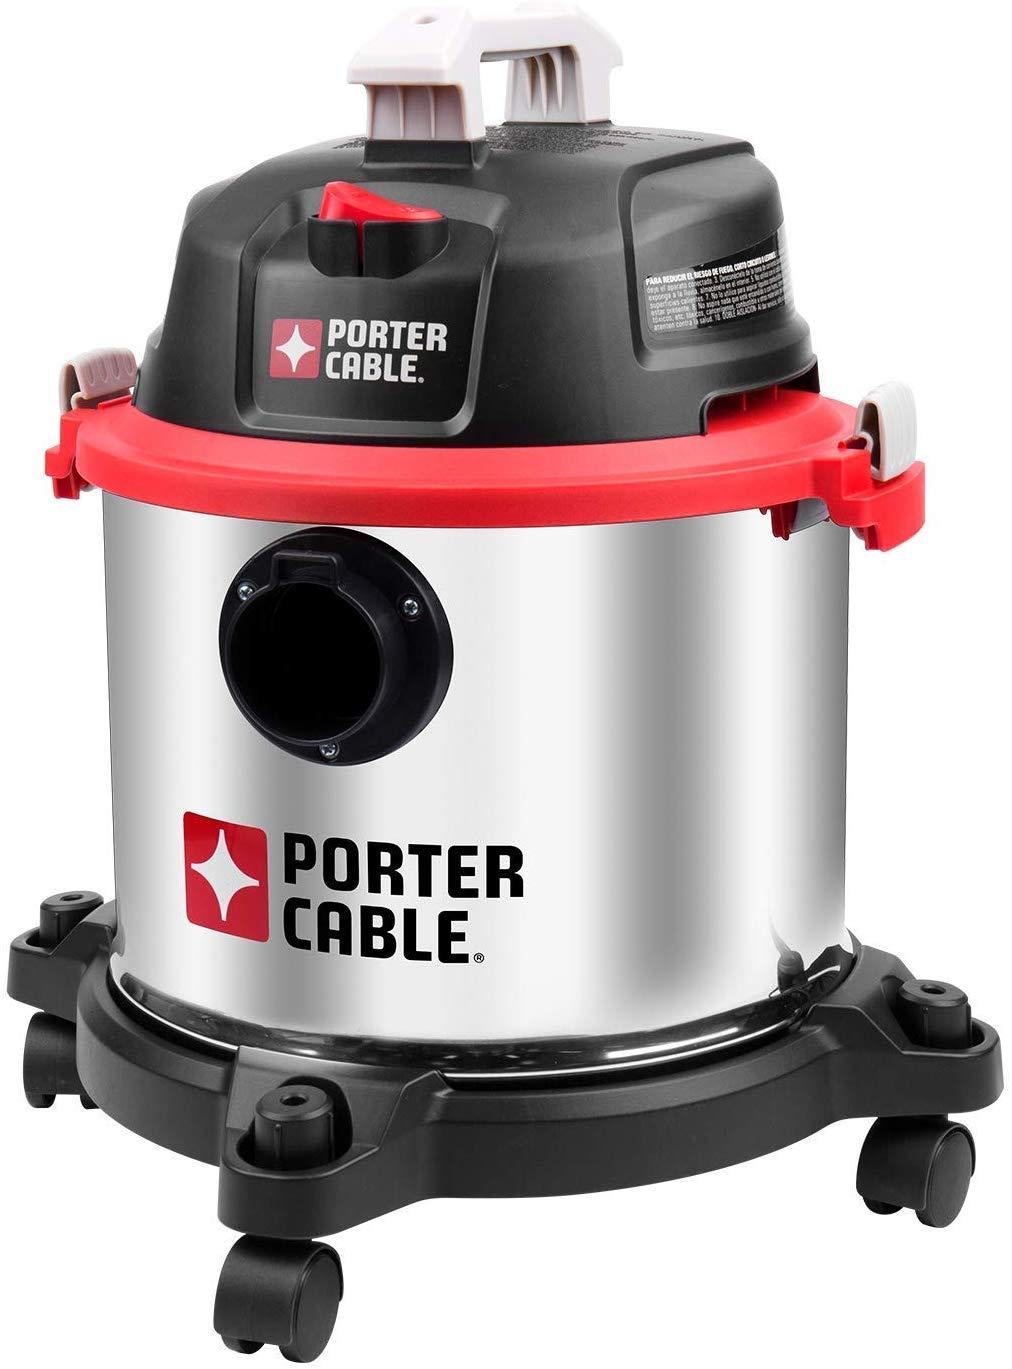 PORTER-CABLE Wet/Dry Vacuum, 5 Gallon, 4 Horsepower Stainless Steel Shop Vac PCX18406-5B